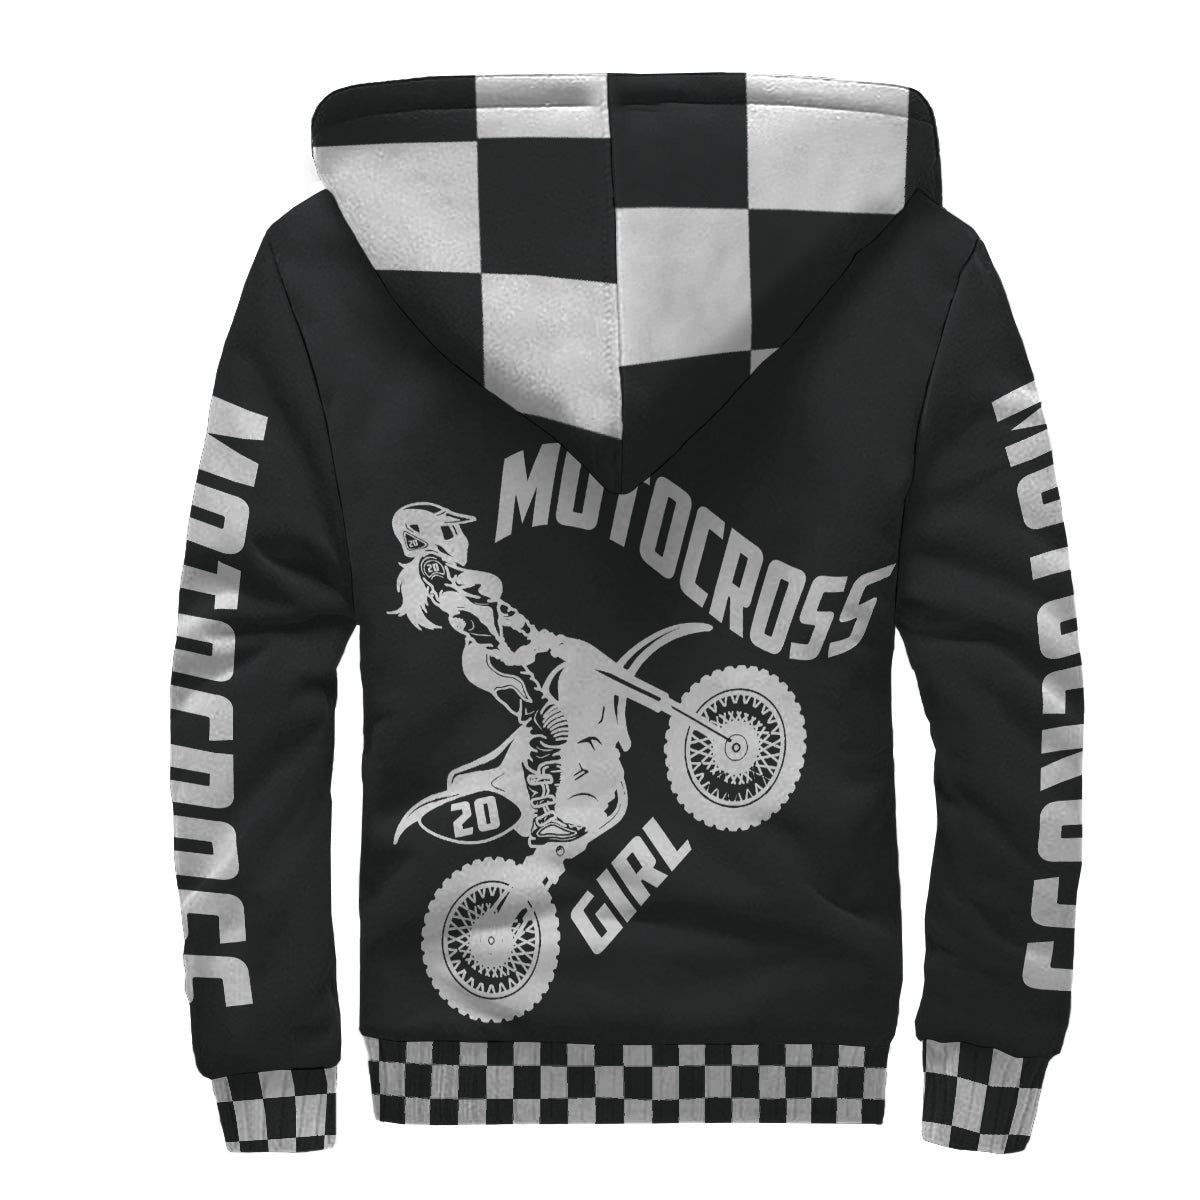 Motocross Girl Sherpa Jacket